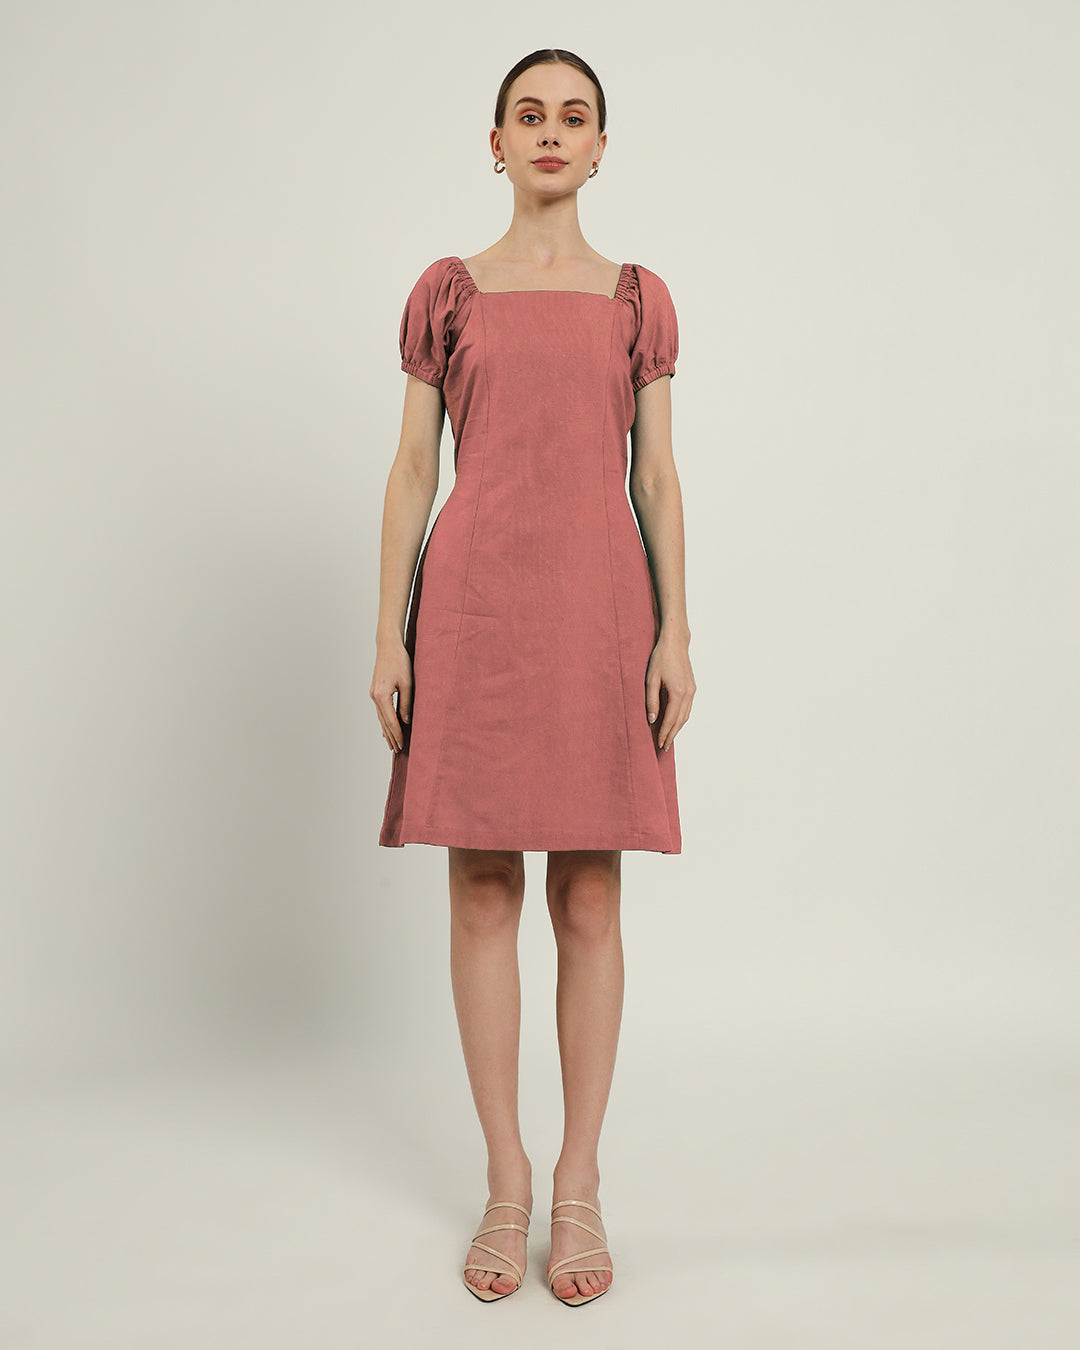 The Arar Ivory Pink Cotton Dress